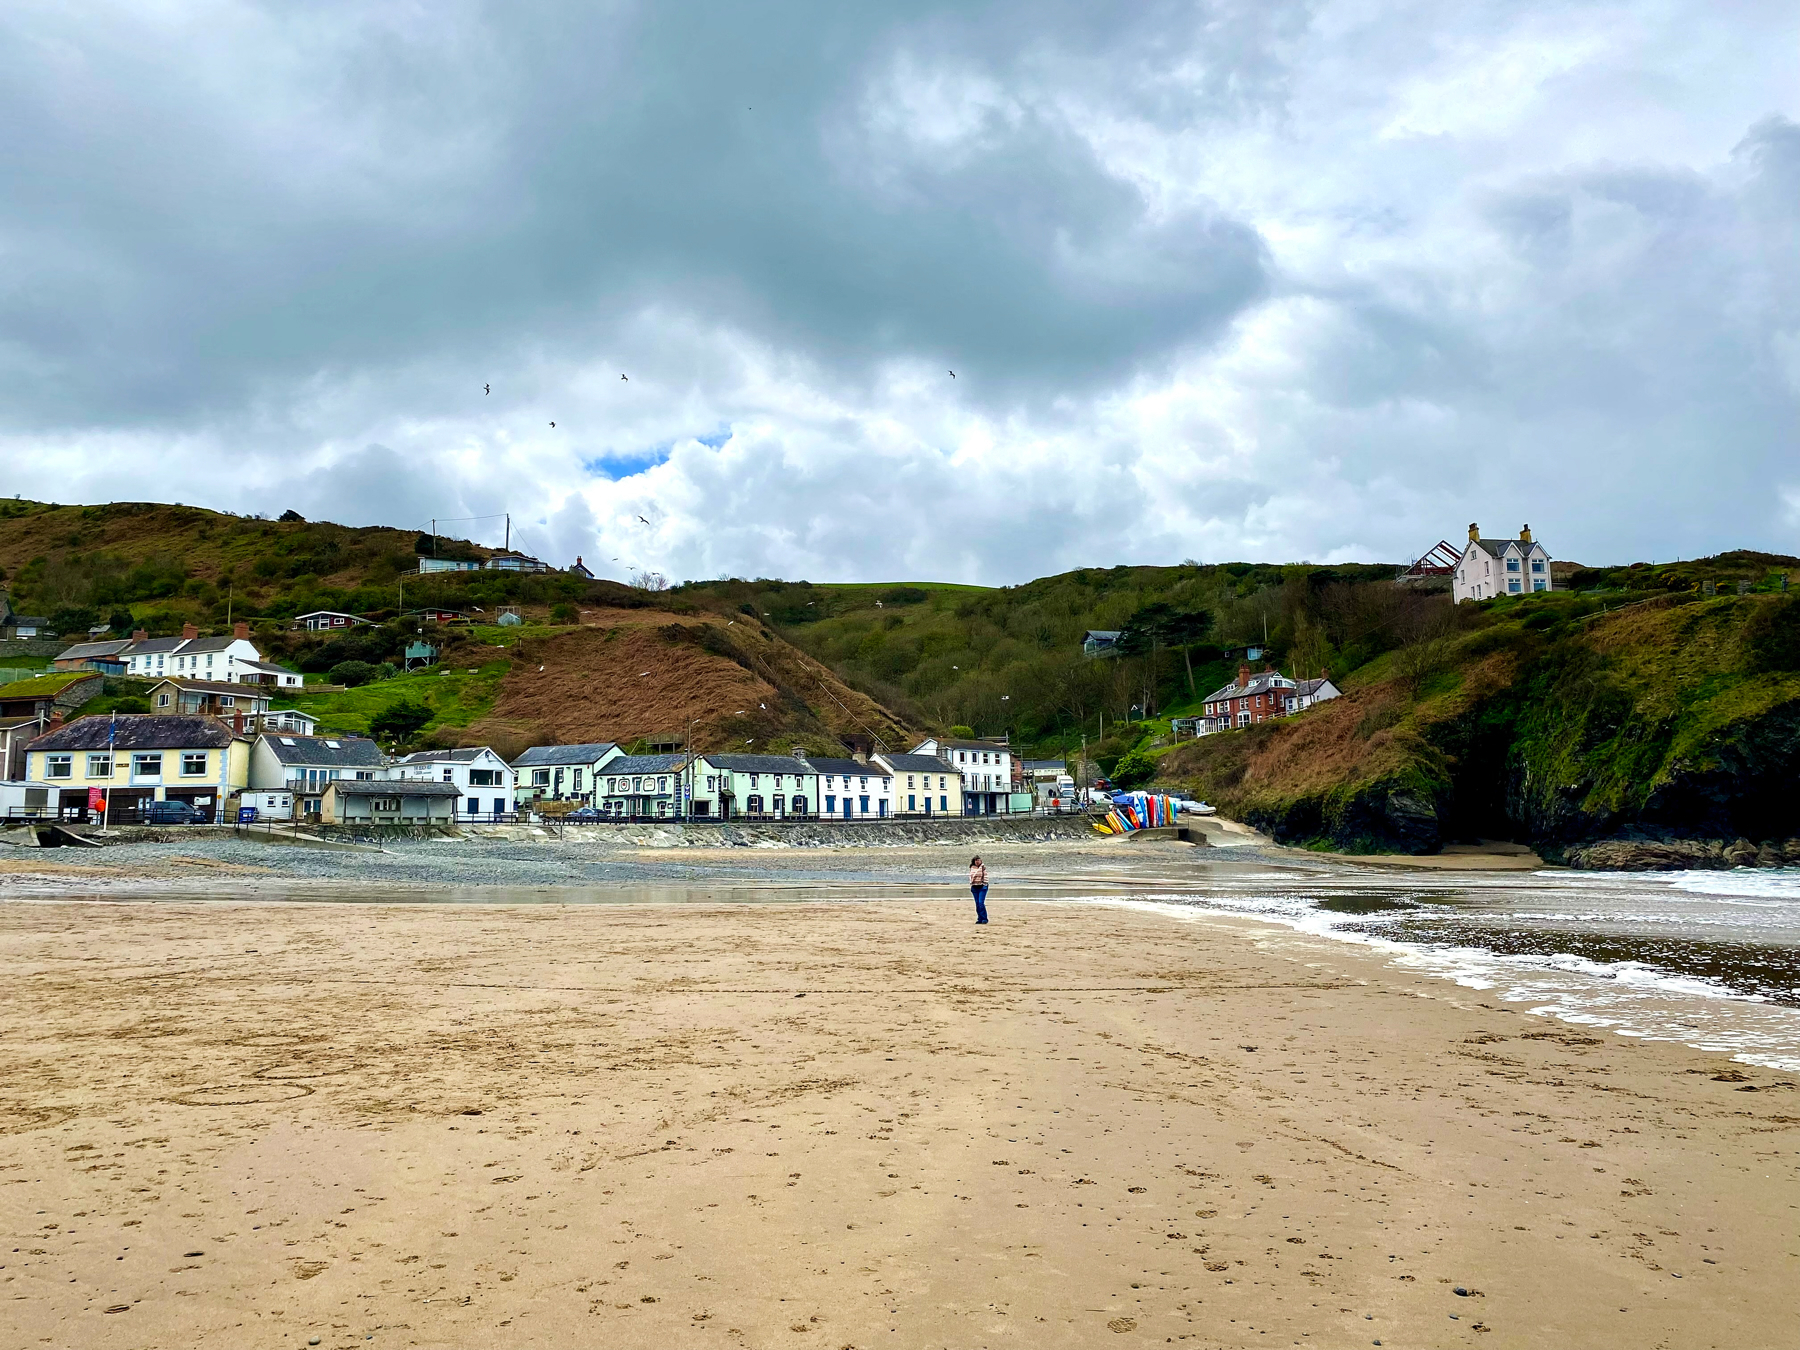 Sandy beach with a lone figure walking, coastal buildings nestled on the hillside, dark clouds overhead.